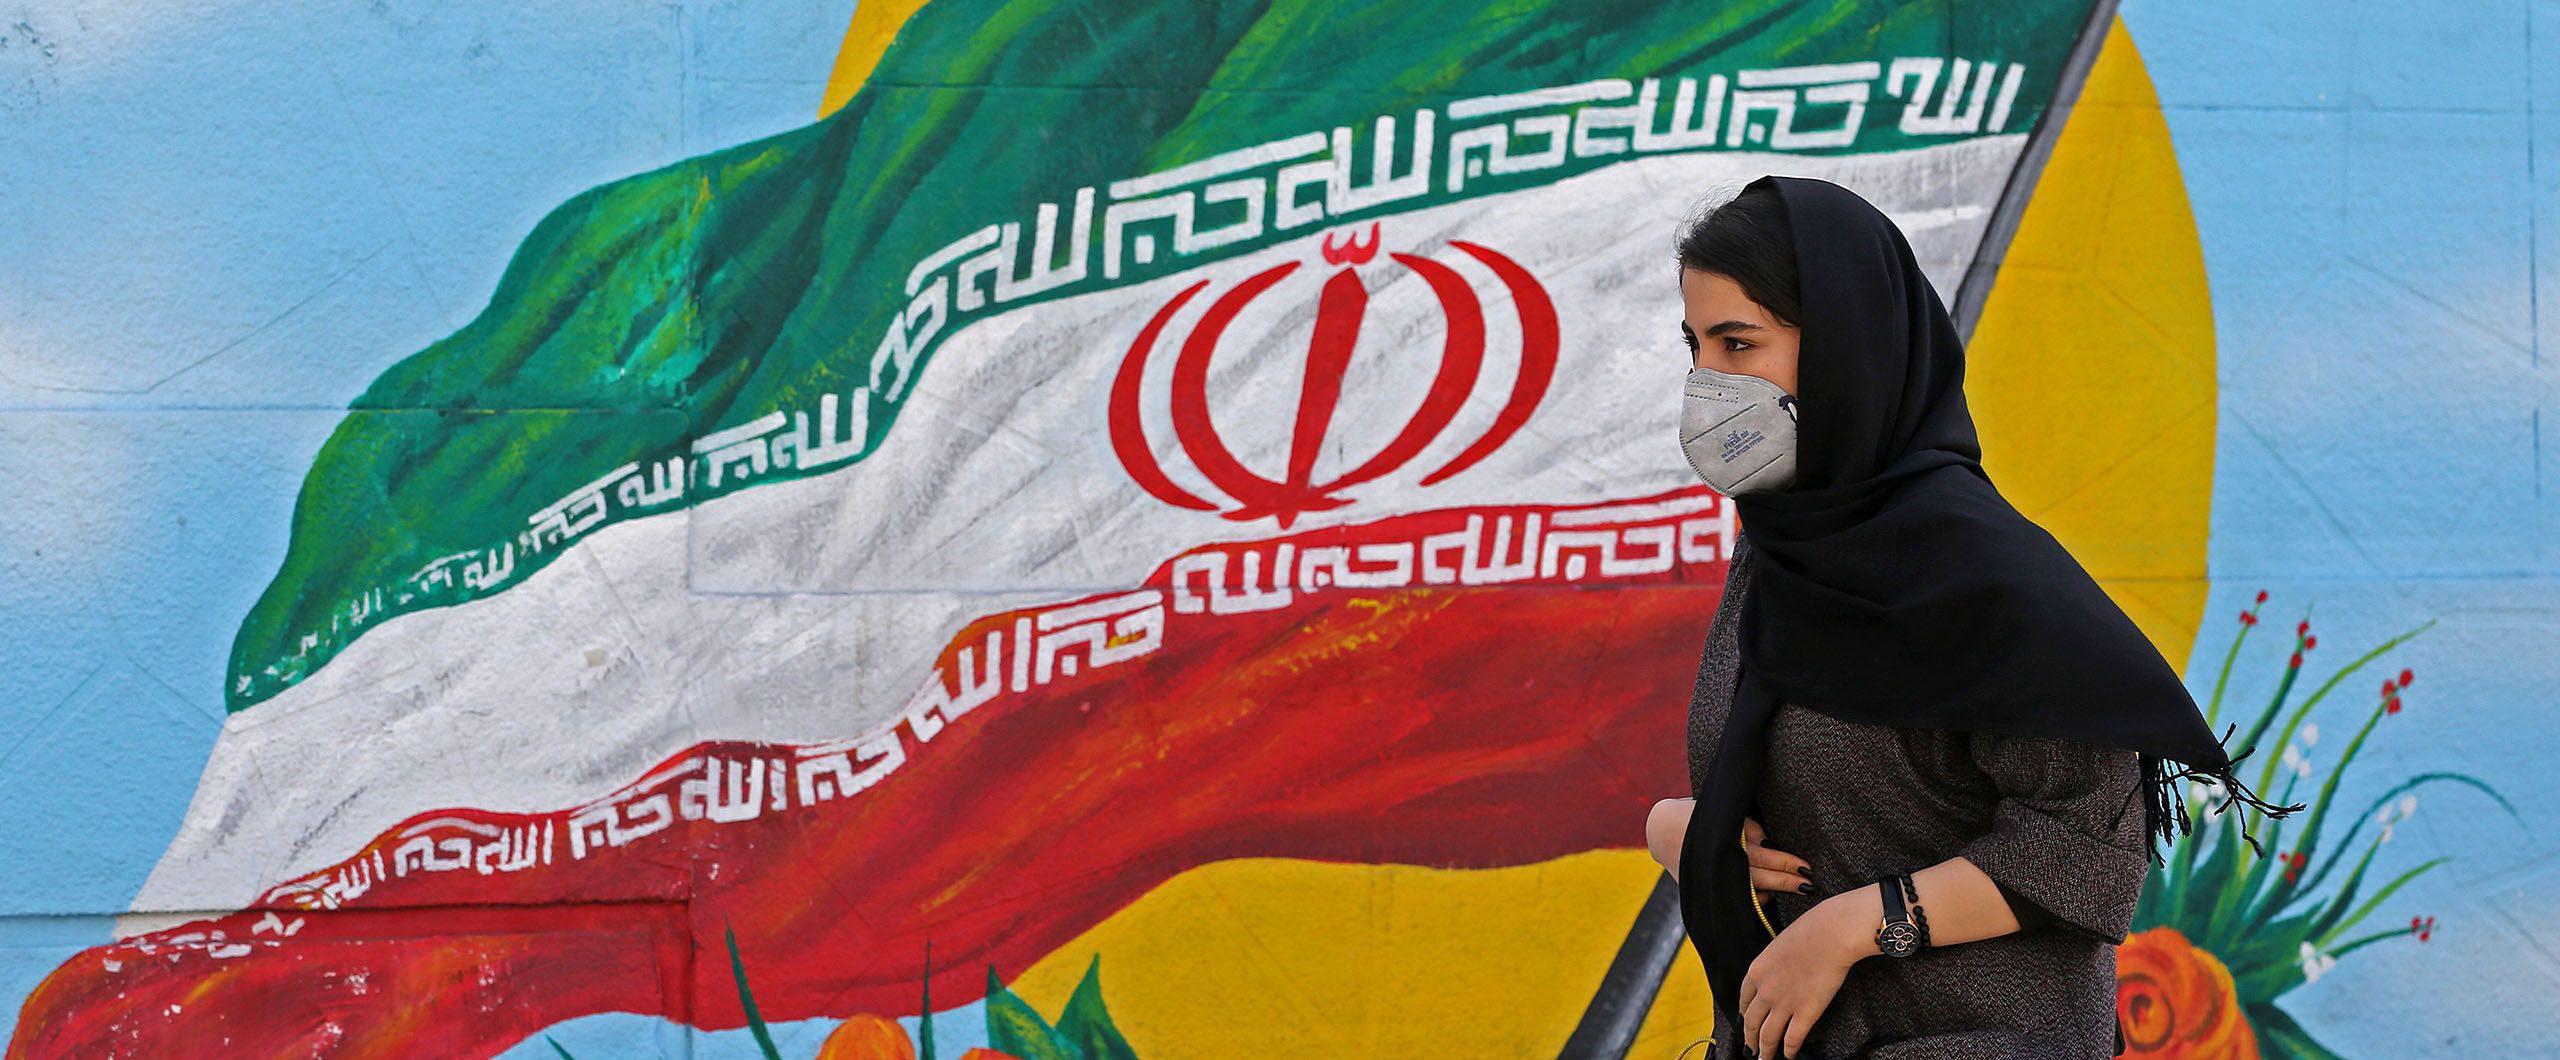 ifmat - Iran regime paranoia over future widespread protests